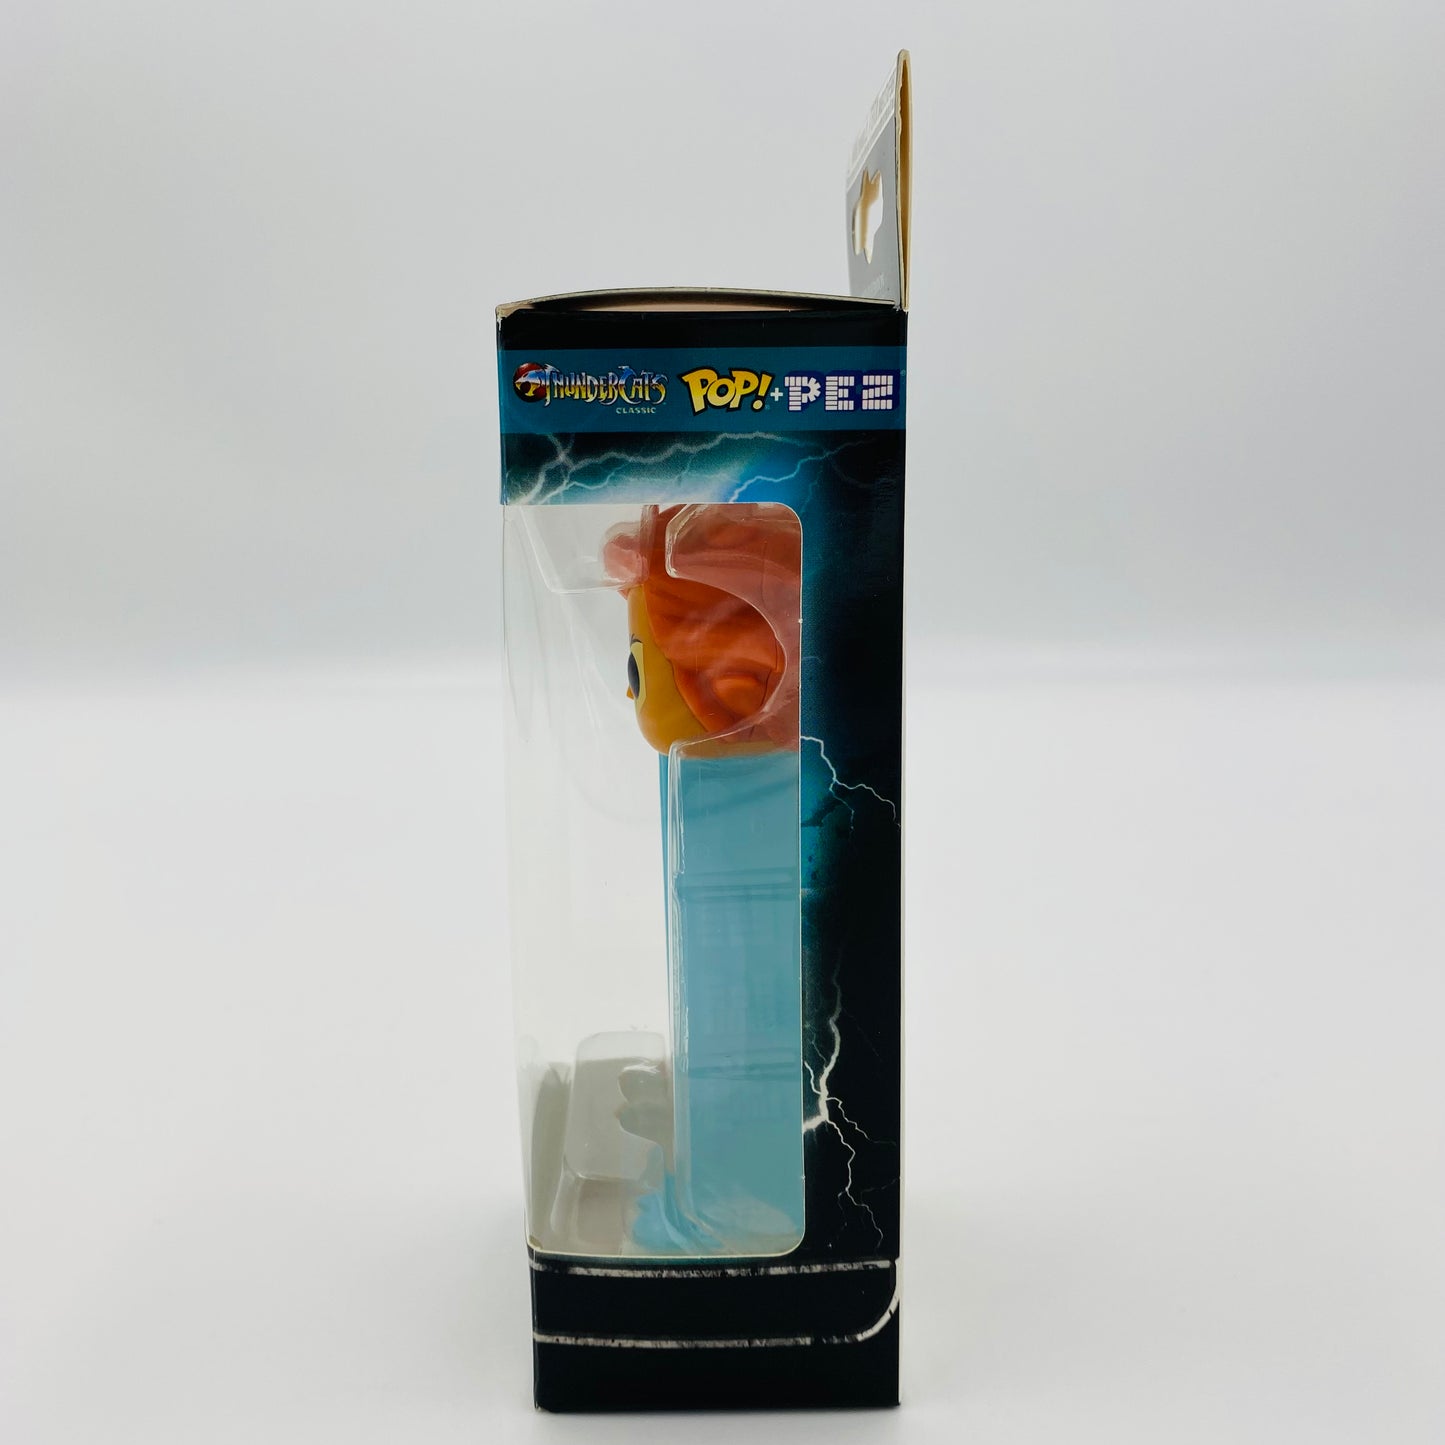 ThunderCats Lion-O Pop! + PEZ dispenser (2019) boxed